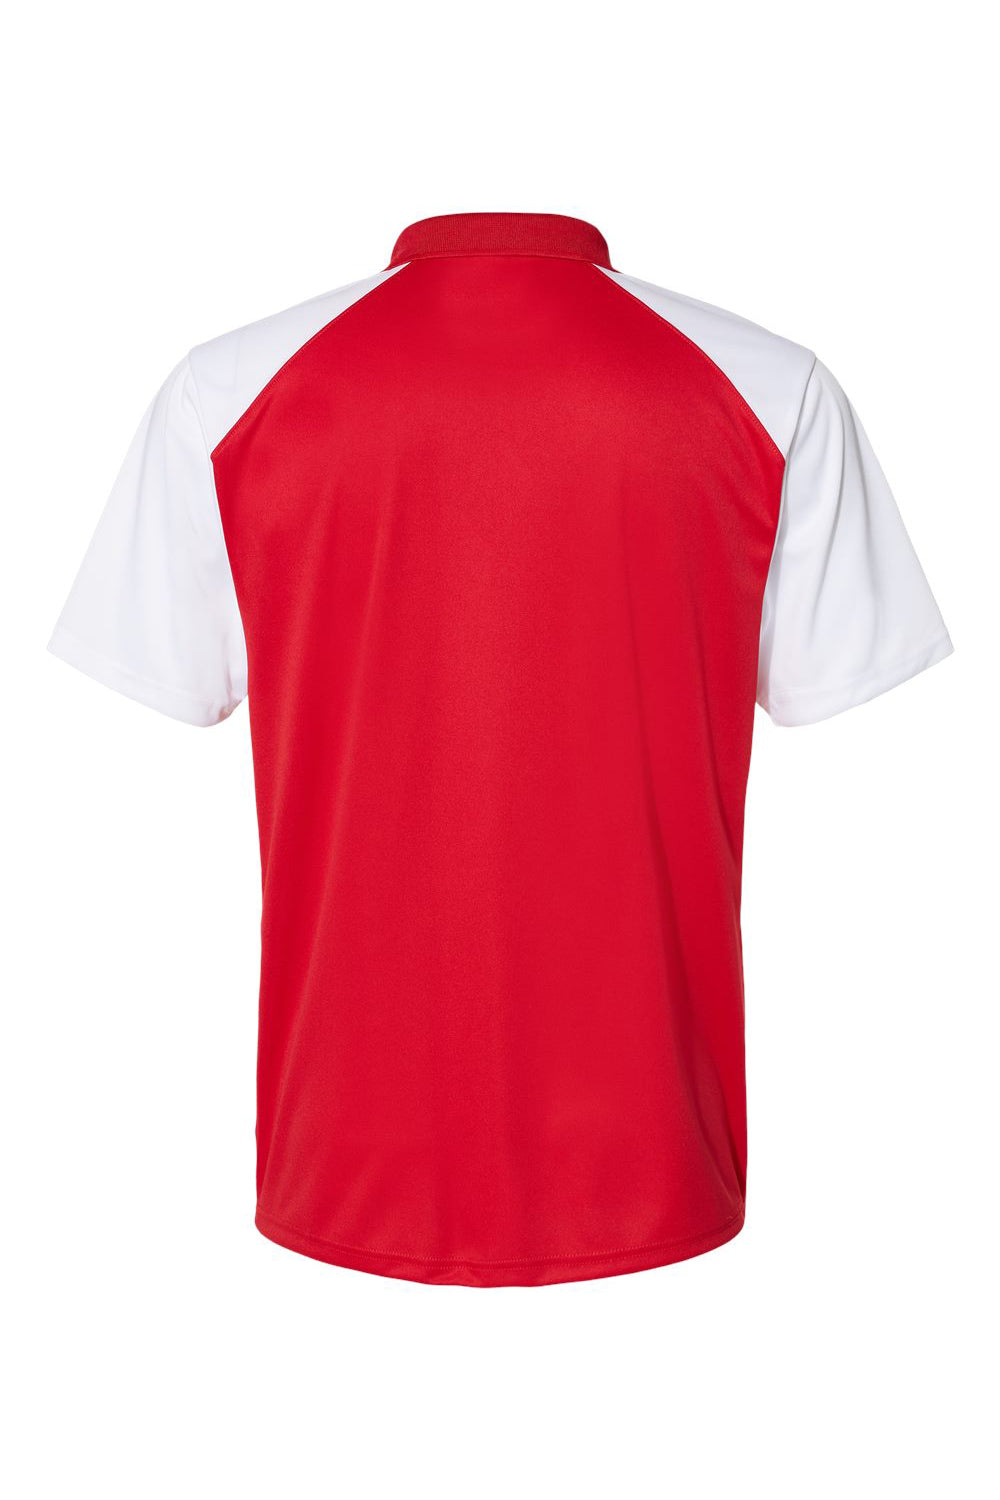 C2 Sport 5903 Mens Moisture Wicking Short Sleeve Polo Shirt Red/White Flat Back